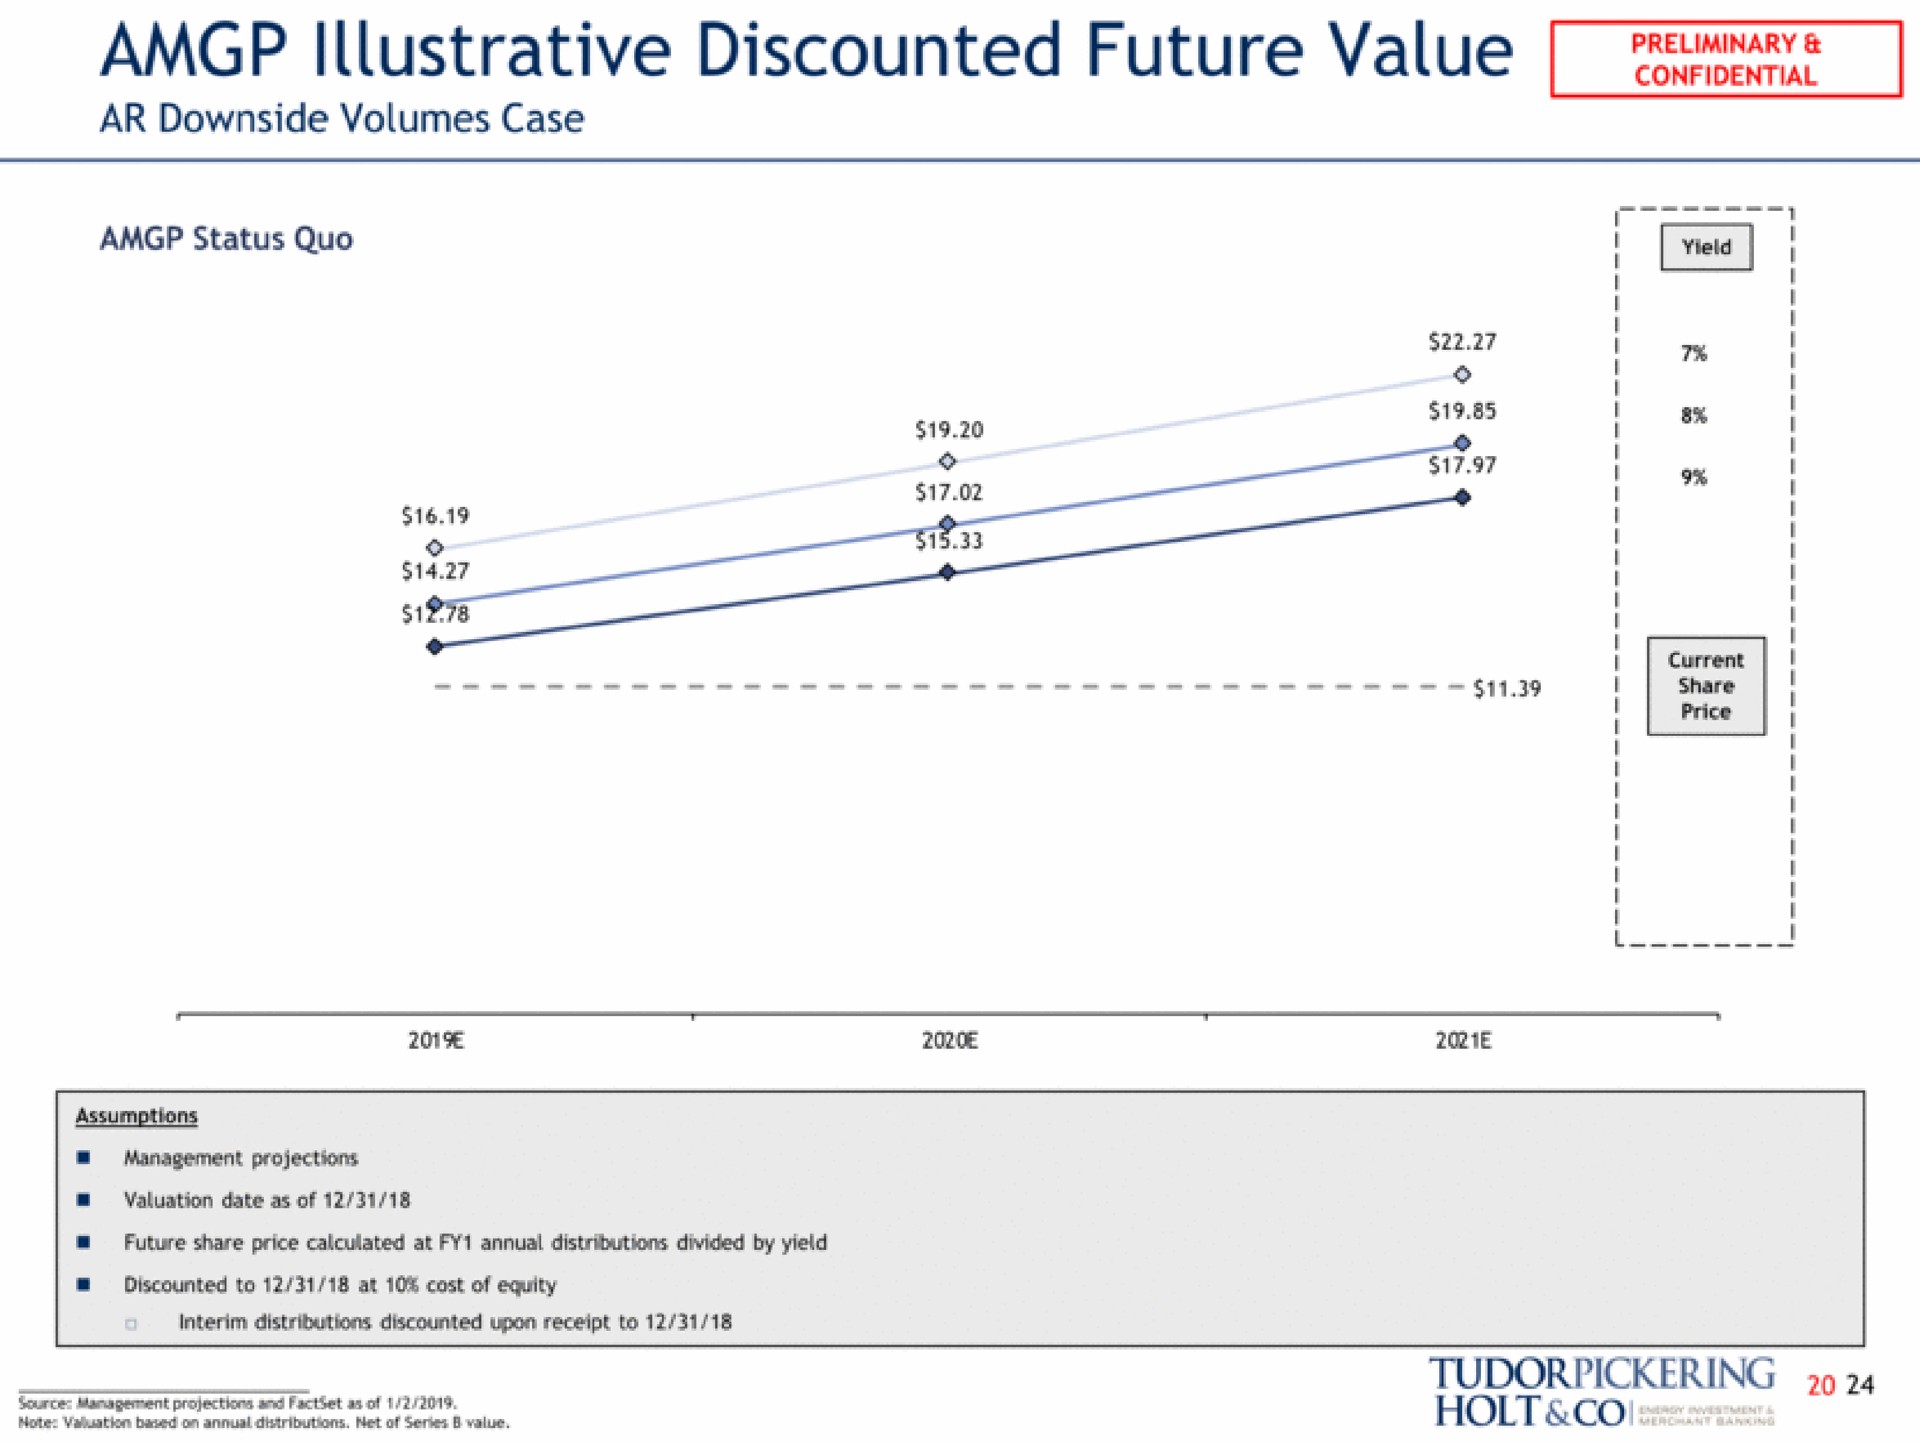 illustrative discounted future value | Tudor, Pickering, Holt & Co